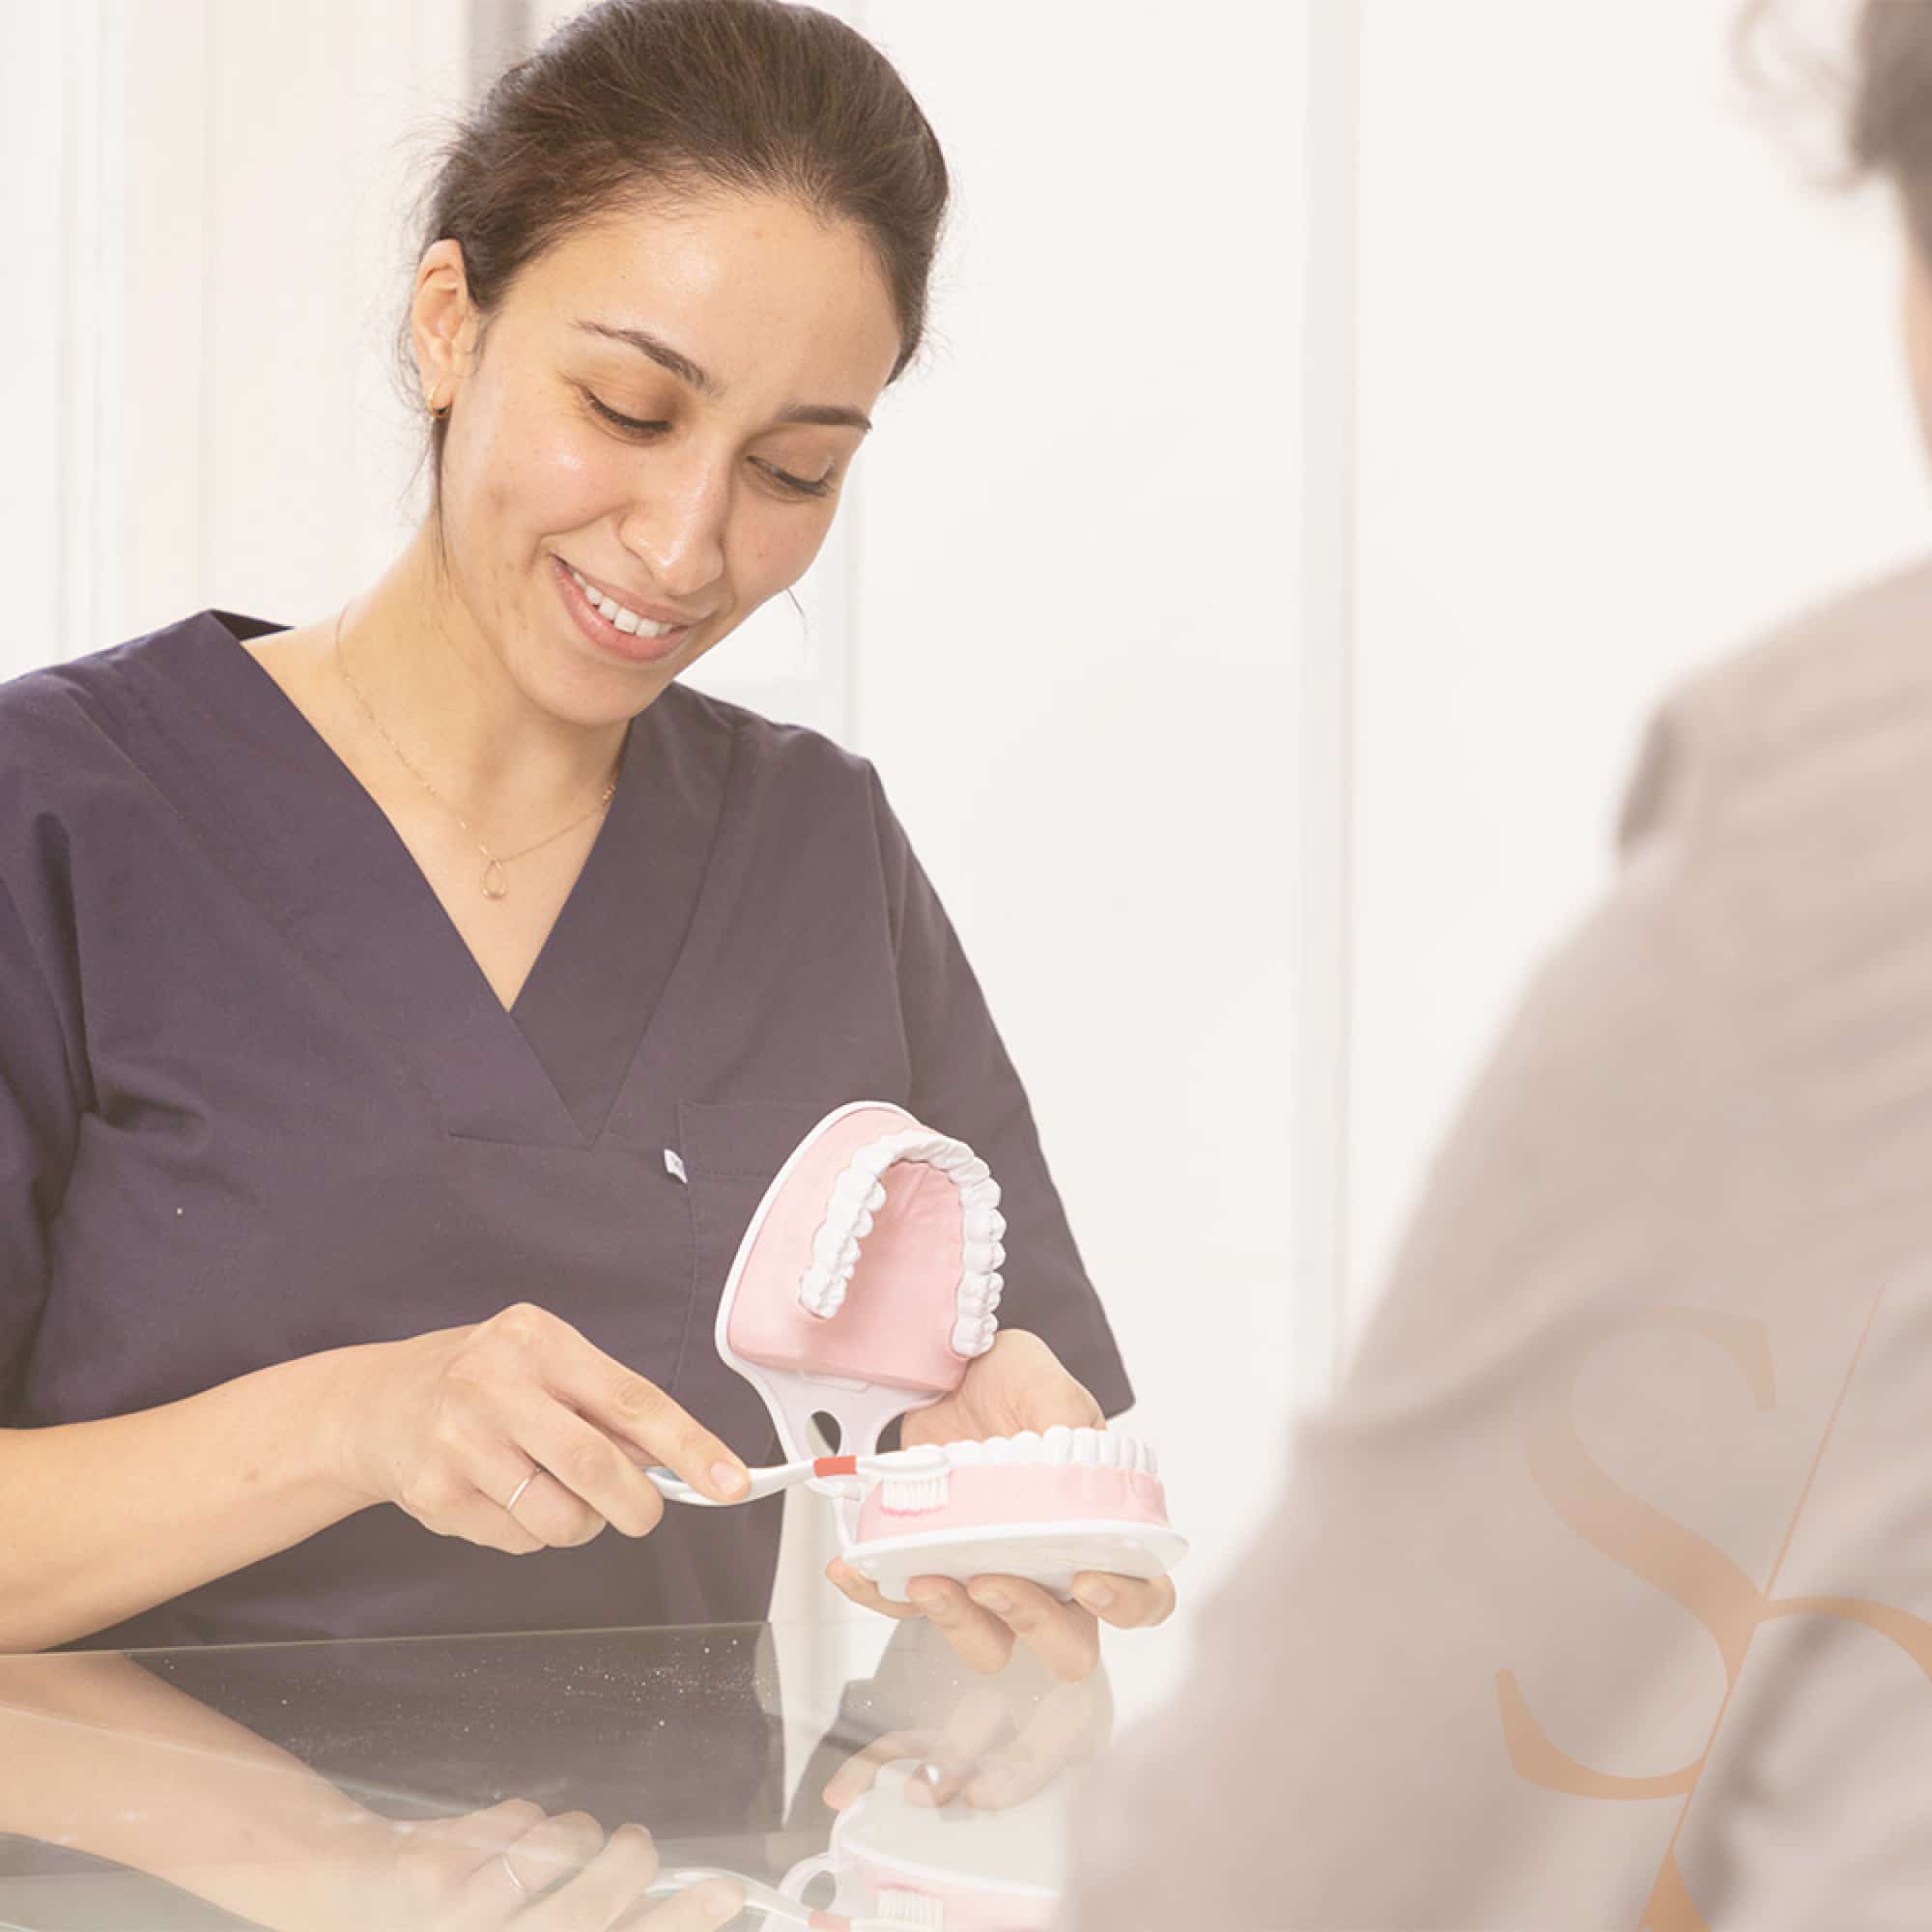 Bilan parodontal et exament bucco-dentaire | Clinique dentaire Sana Oris Paris 8